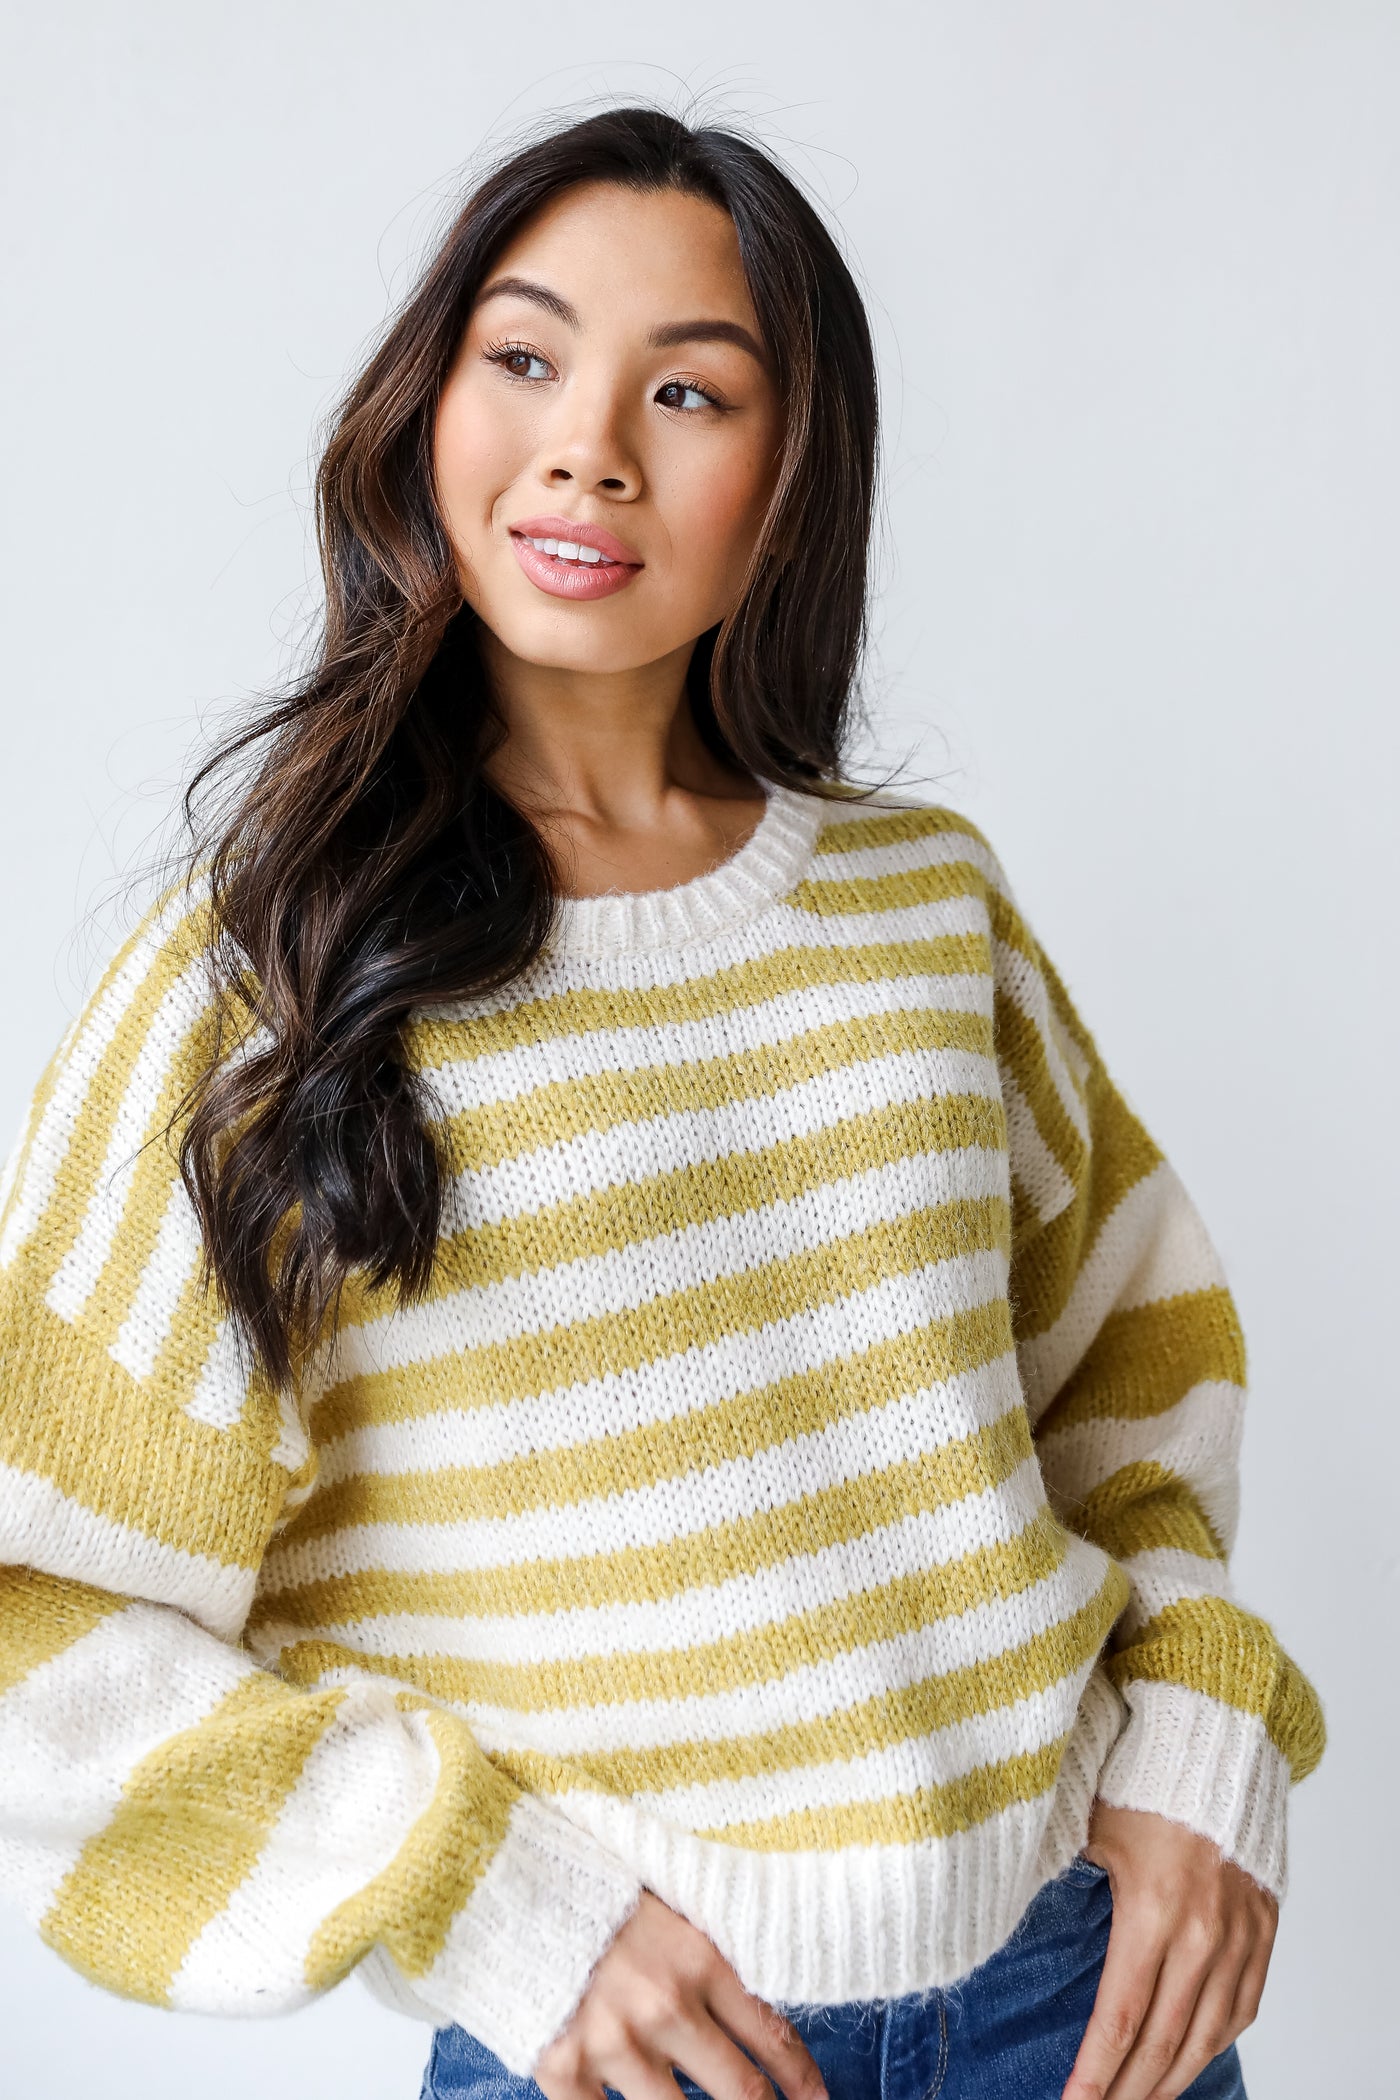 Striped Sweater in mustard